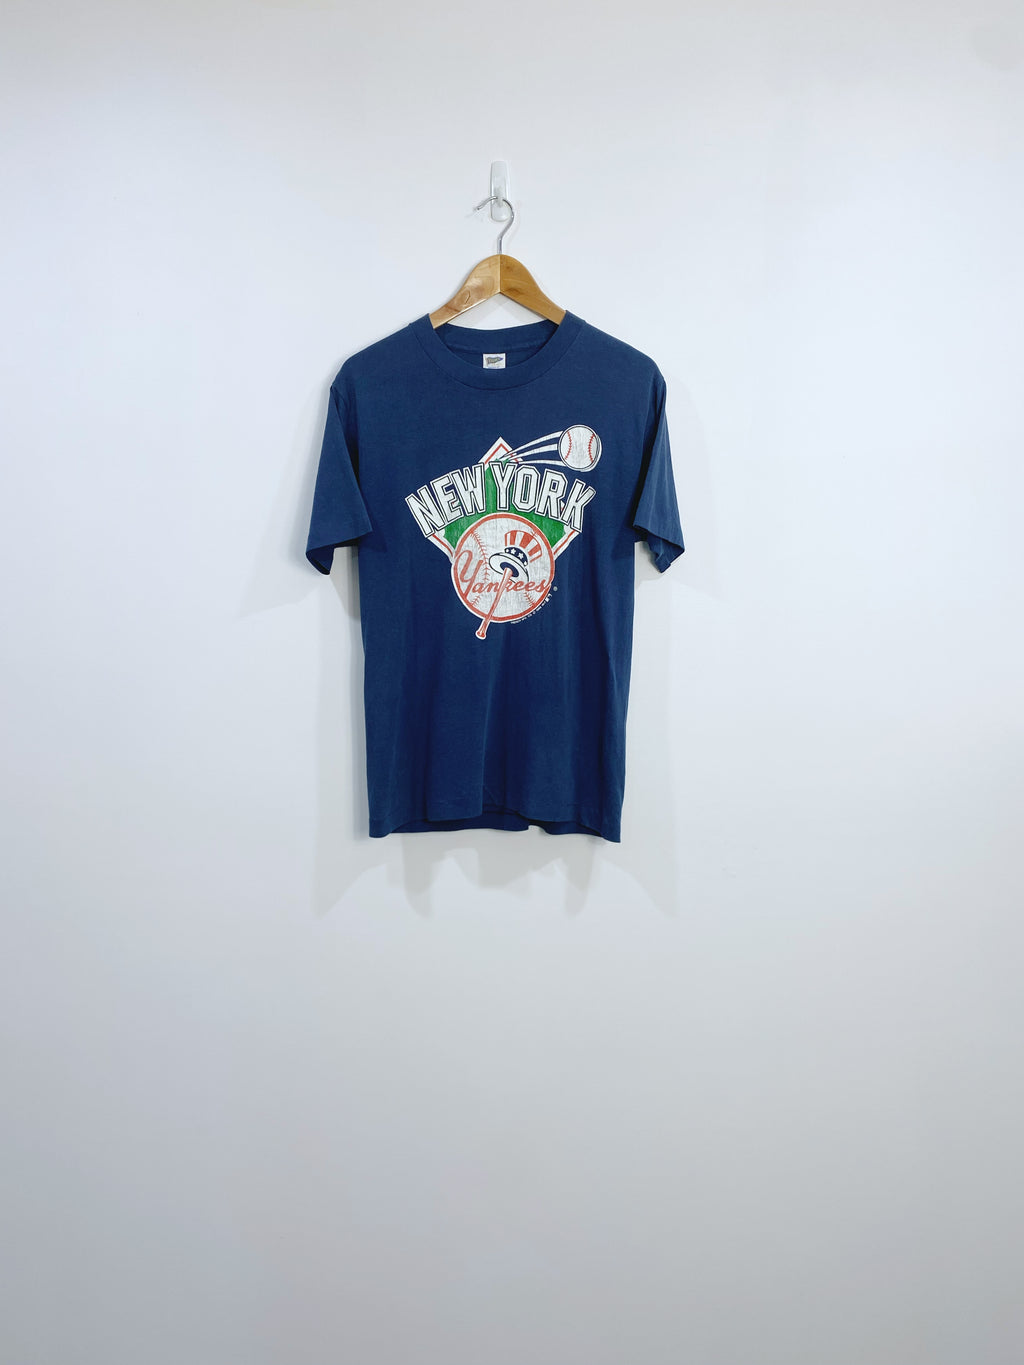 1988 Vintage Chicago Cubs T-Shirt